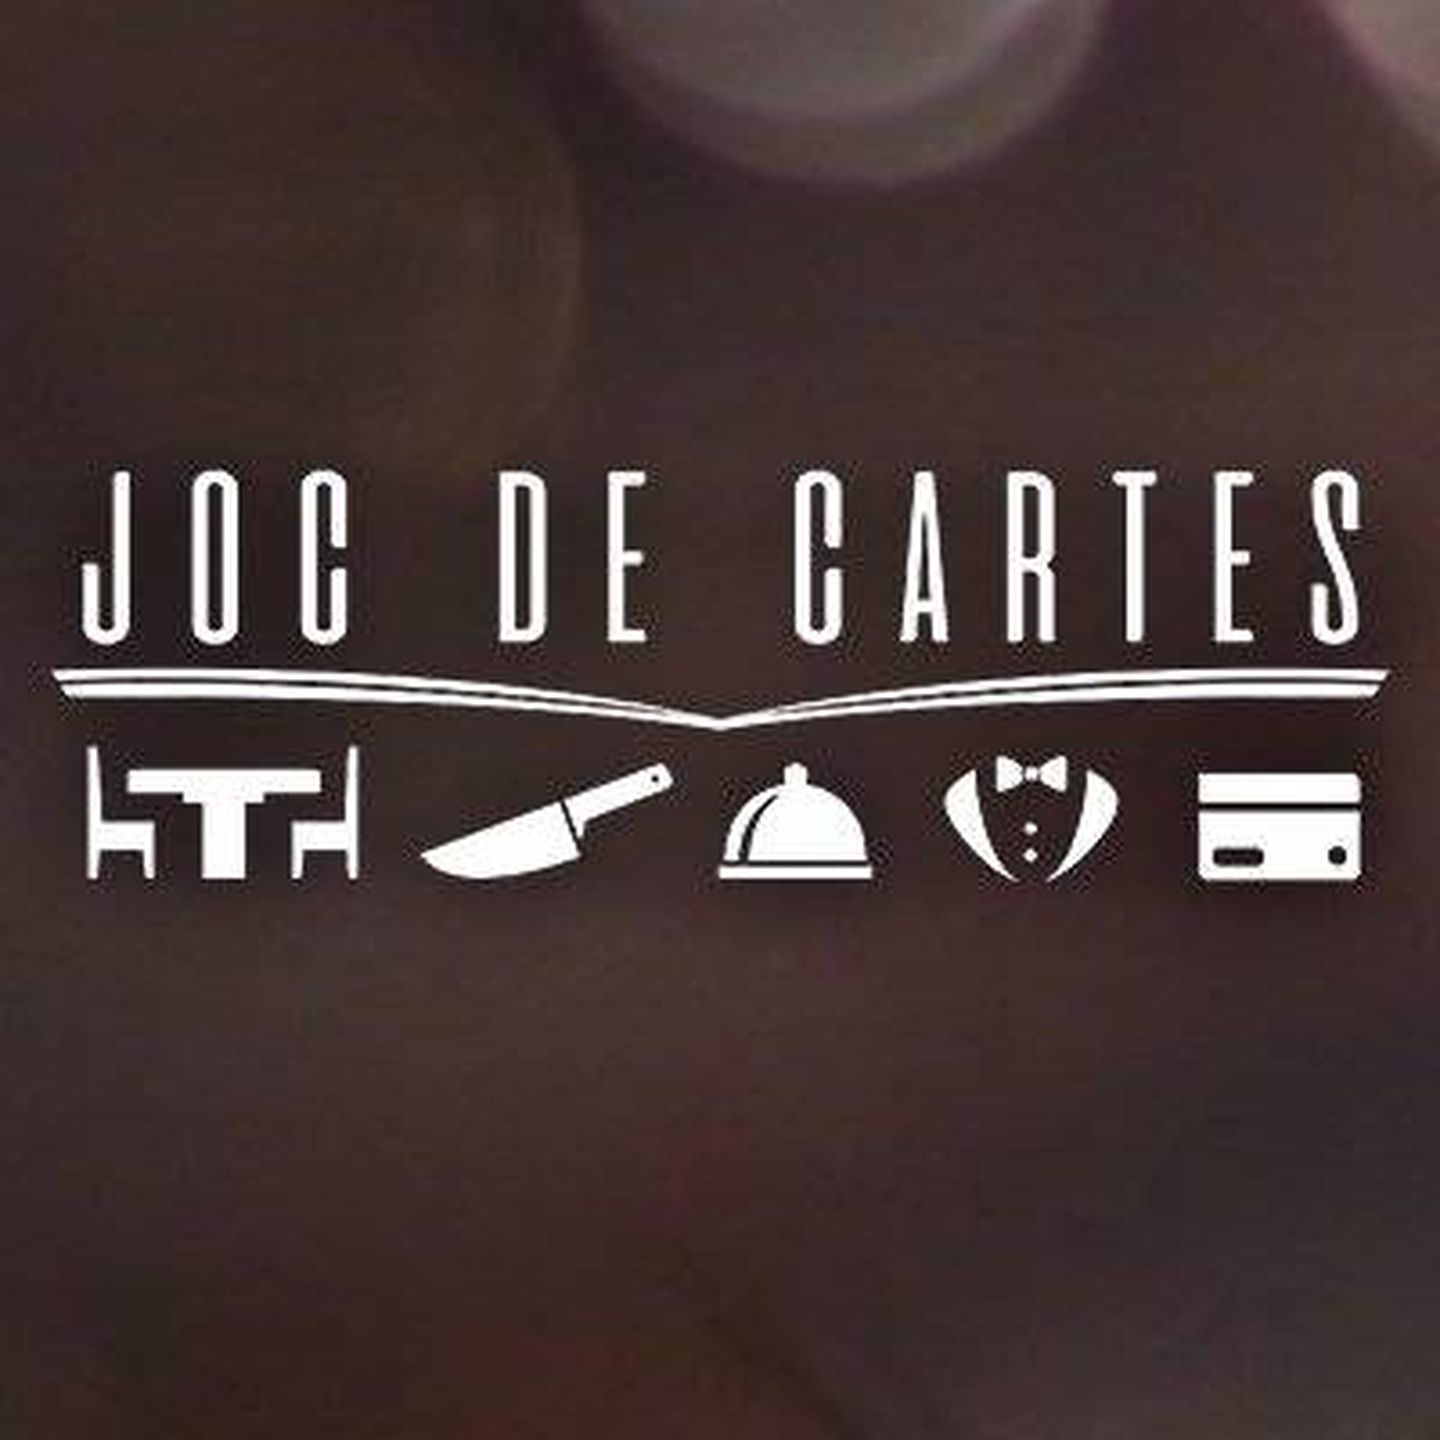 Logotipo del concurso 'Joc de Cartes'.